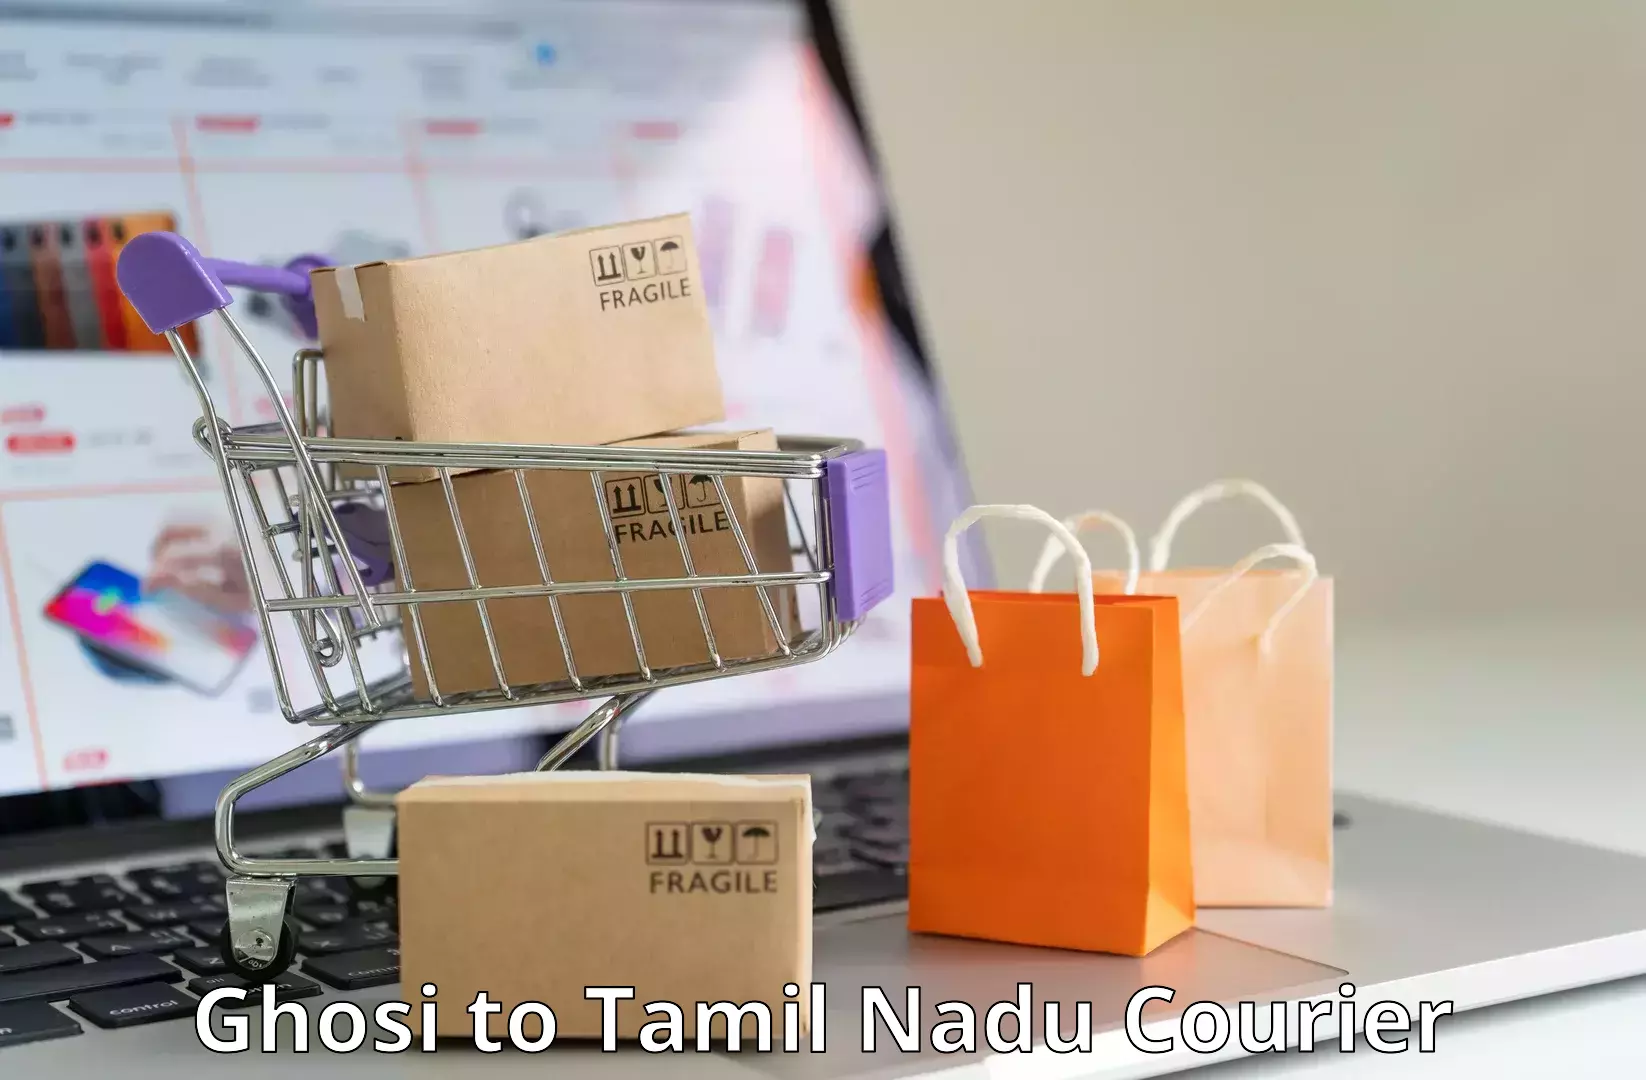 Logistics service provider Ghosi to Tamil Nadu